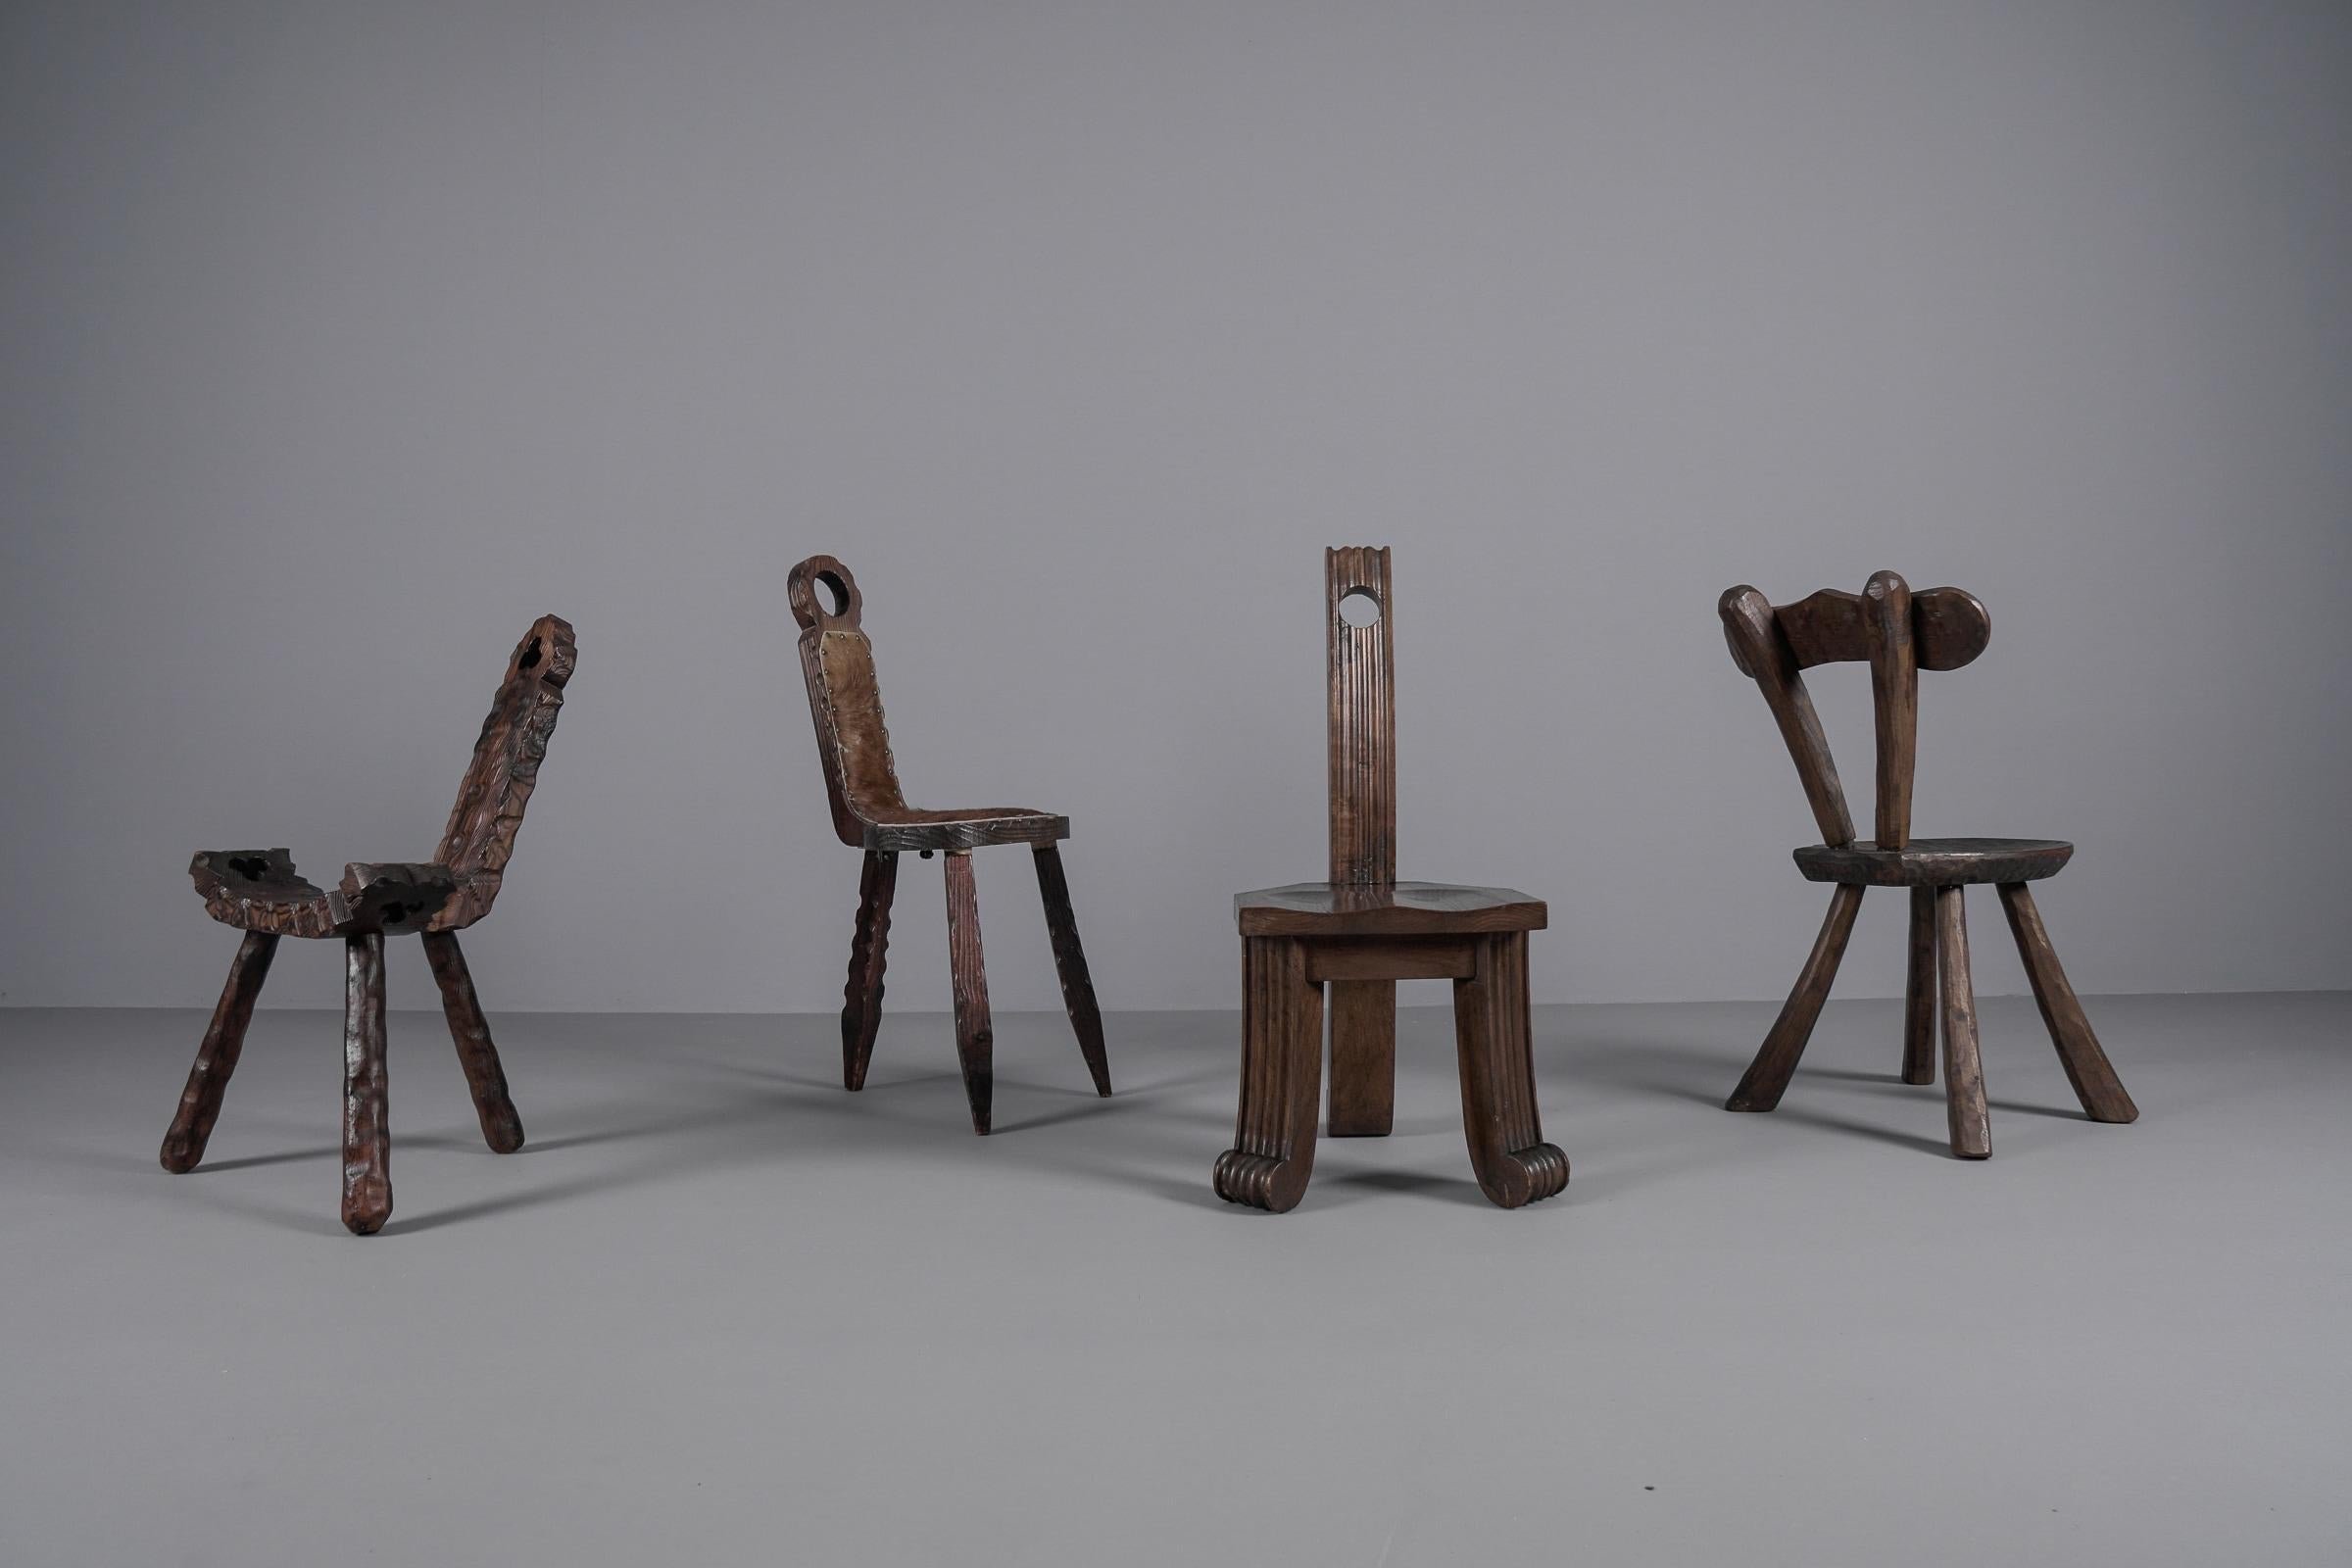 3-Legged Brutalist Rustic Modern Sculptured Chair, 1960s France For Sale 1